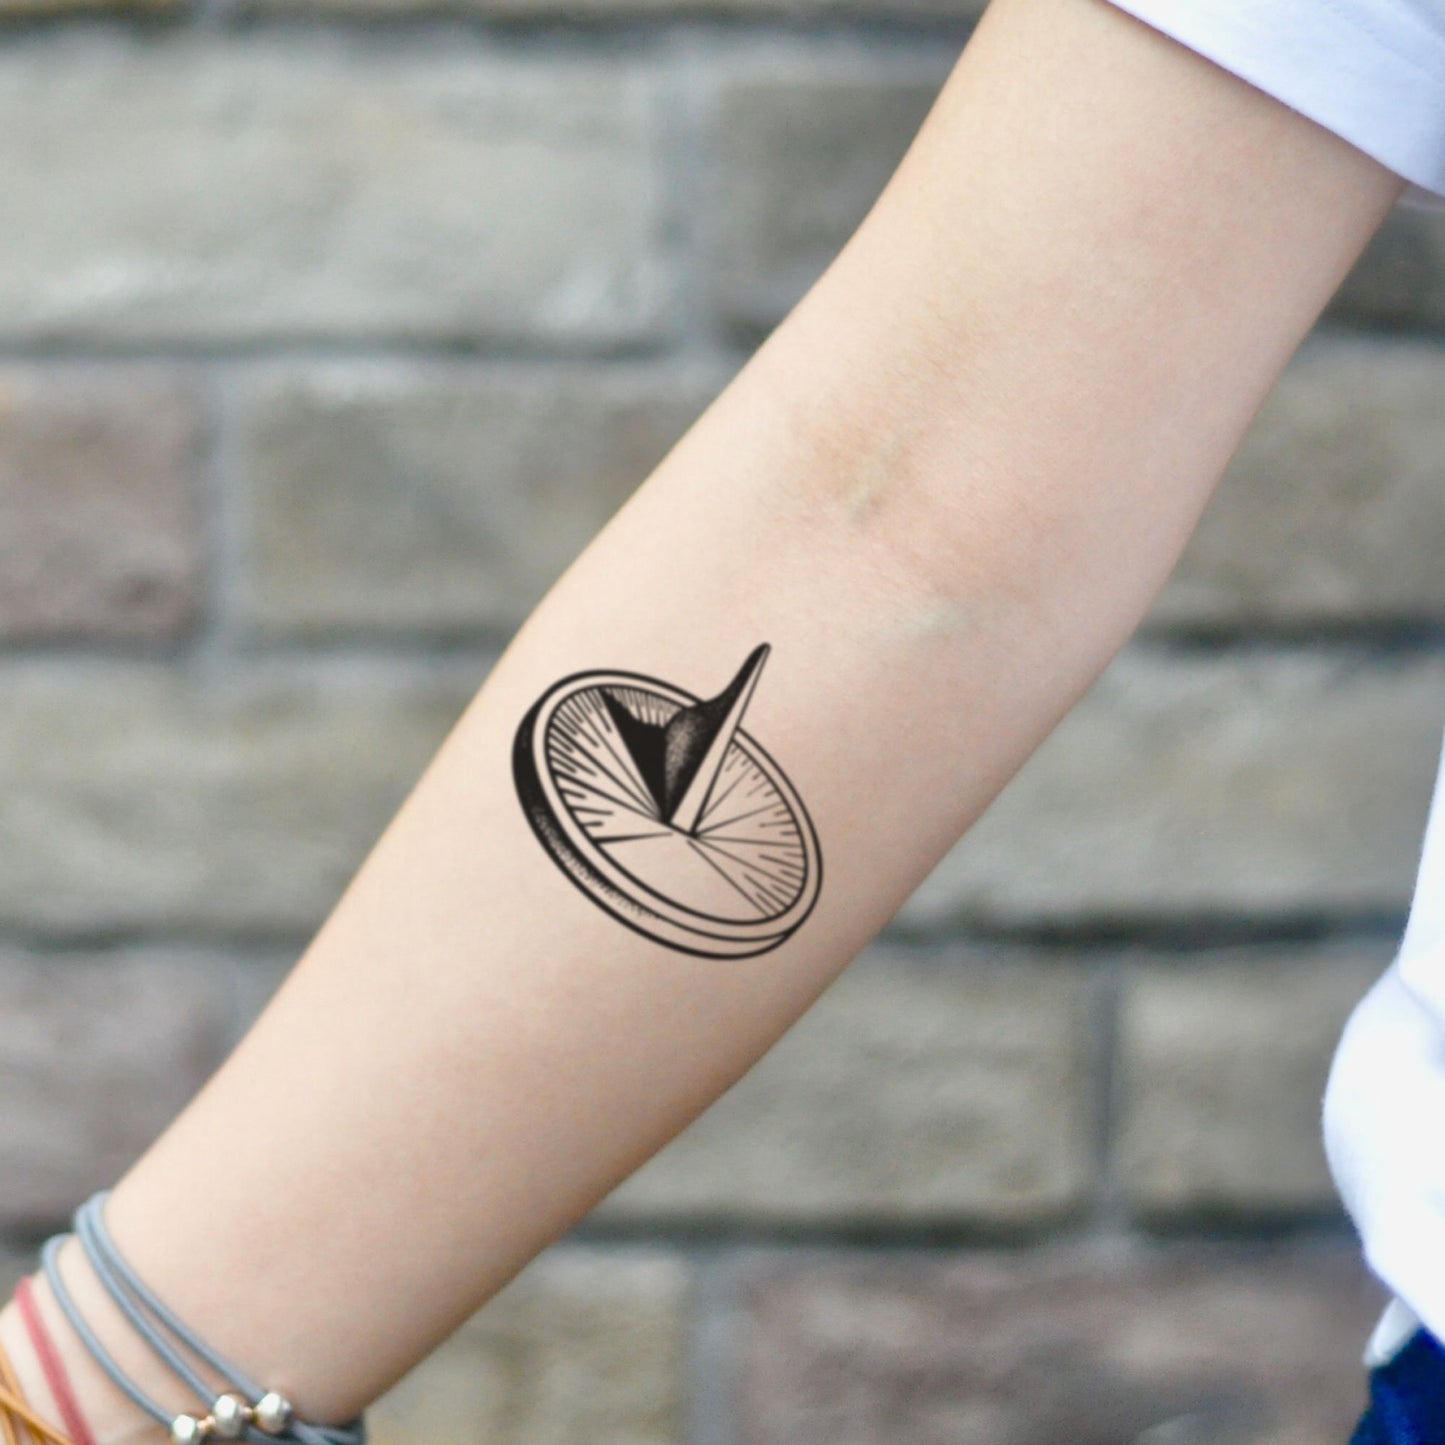 fake small sundial simple illustrative temporary tattoo sticker design idea on inner arm